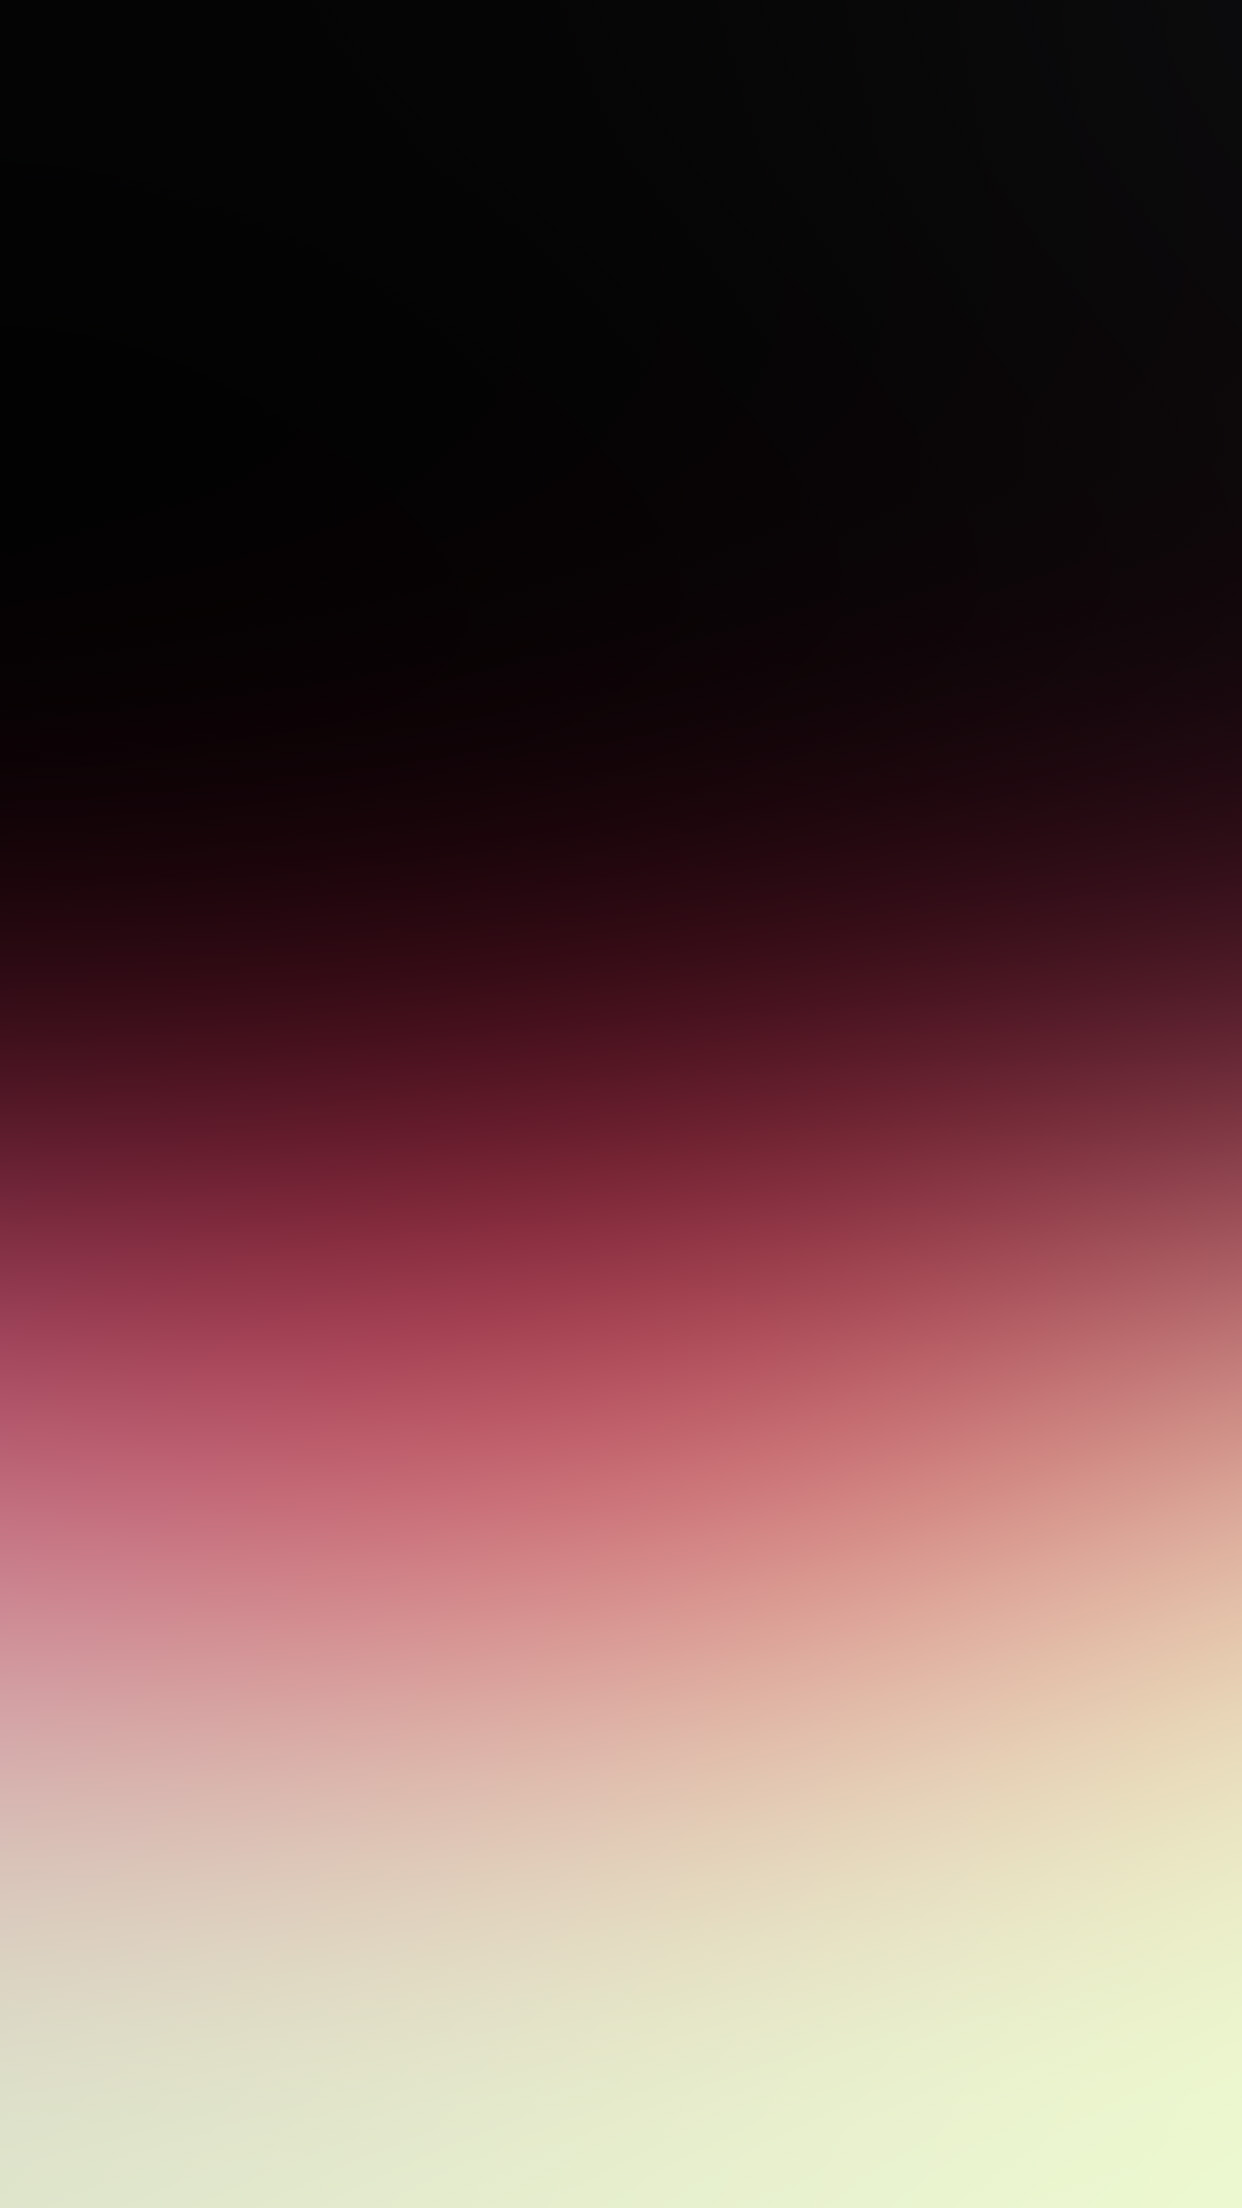 Dark Red Bokeh Gradation Blur Pink Android wallpaper